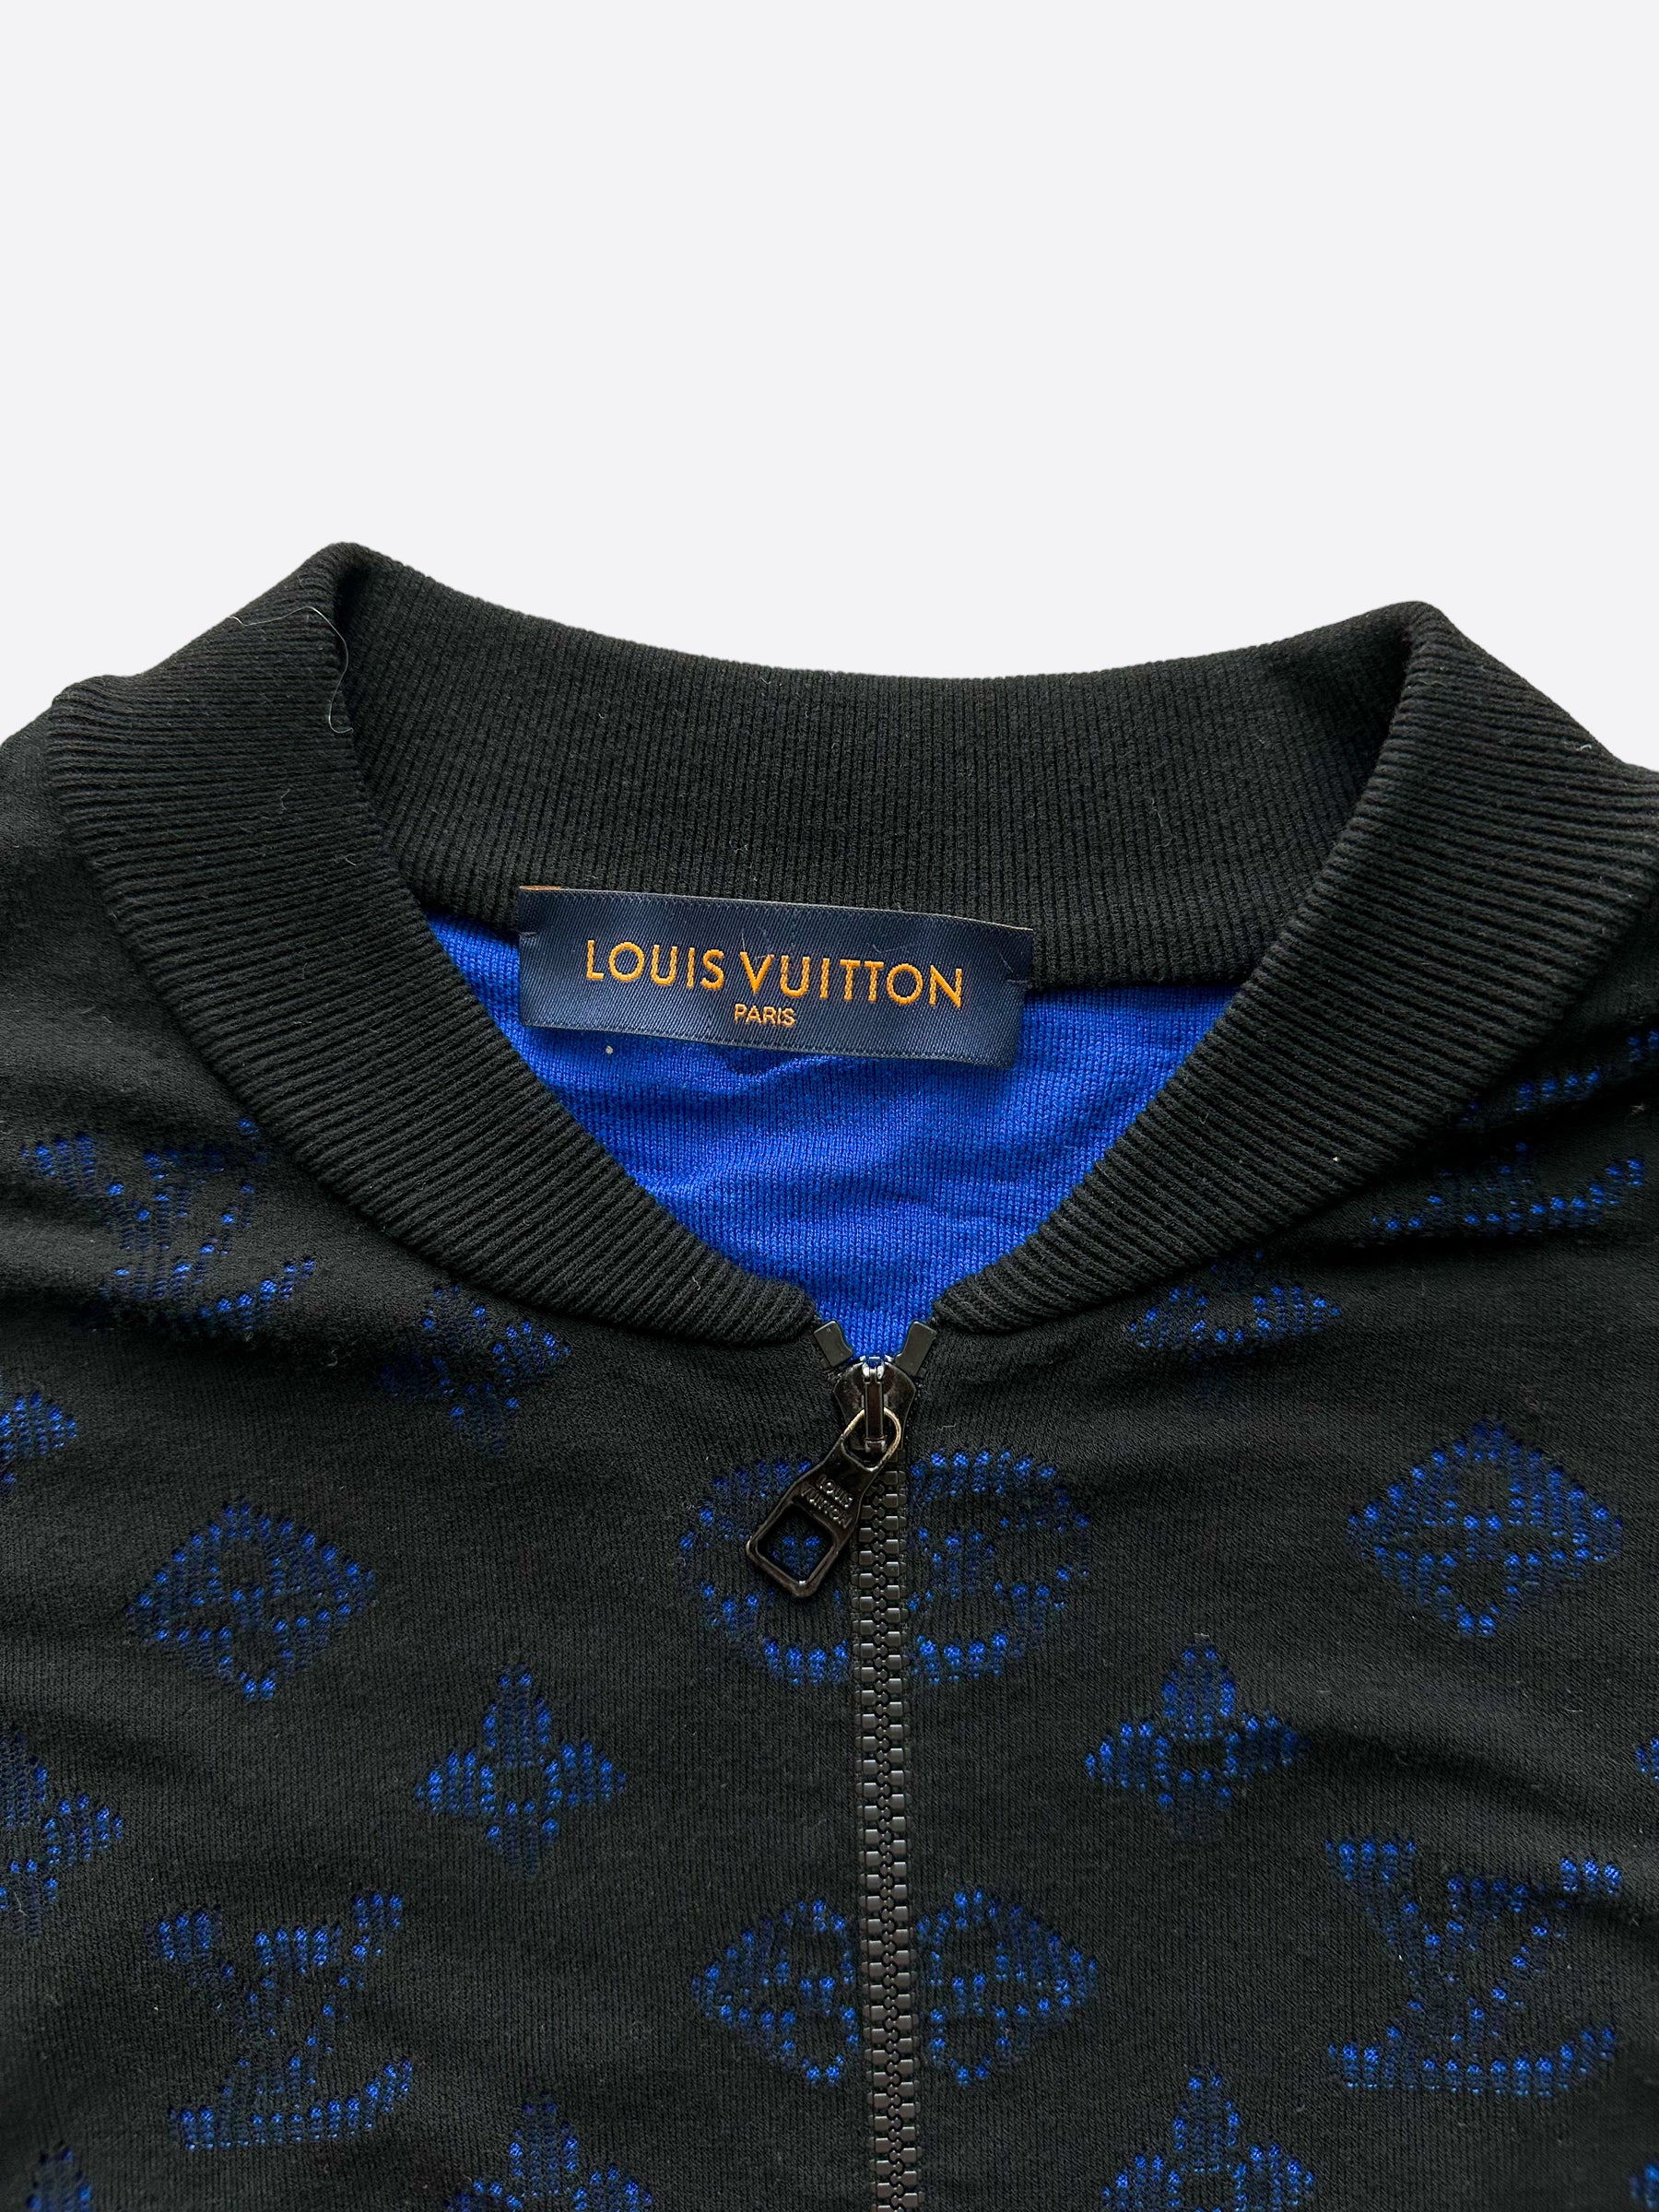 Louis Vuitton Drop Needle Monogram Bomber Jacket REVIEW New for 2020! 